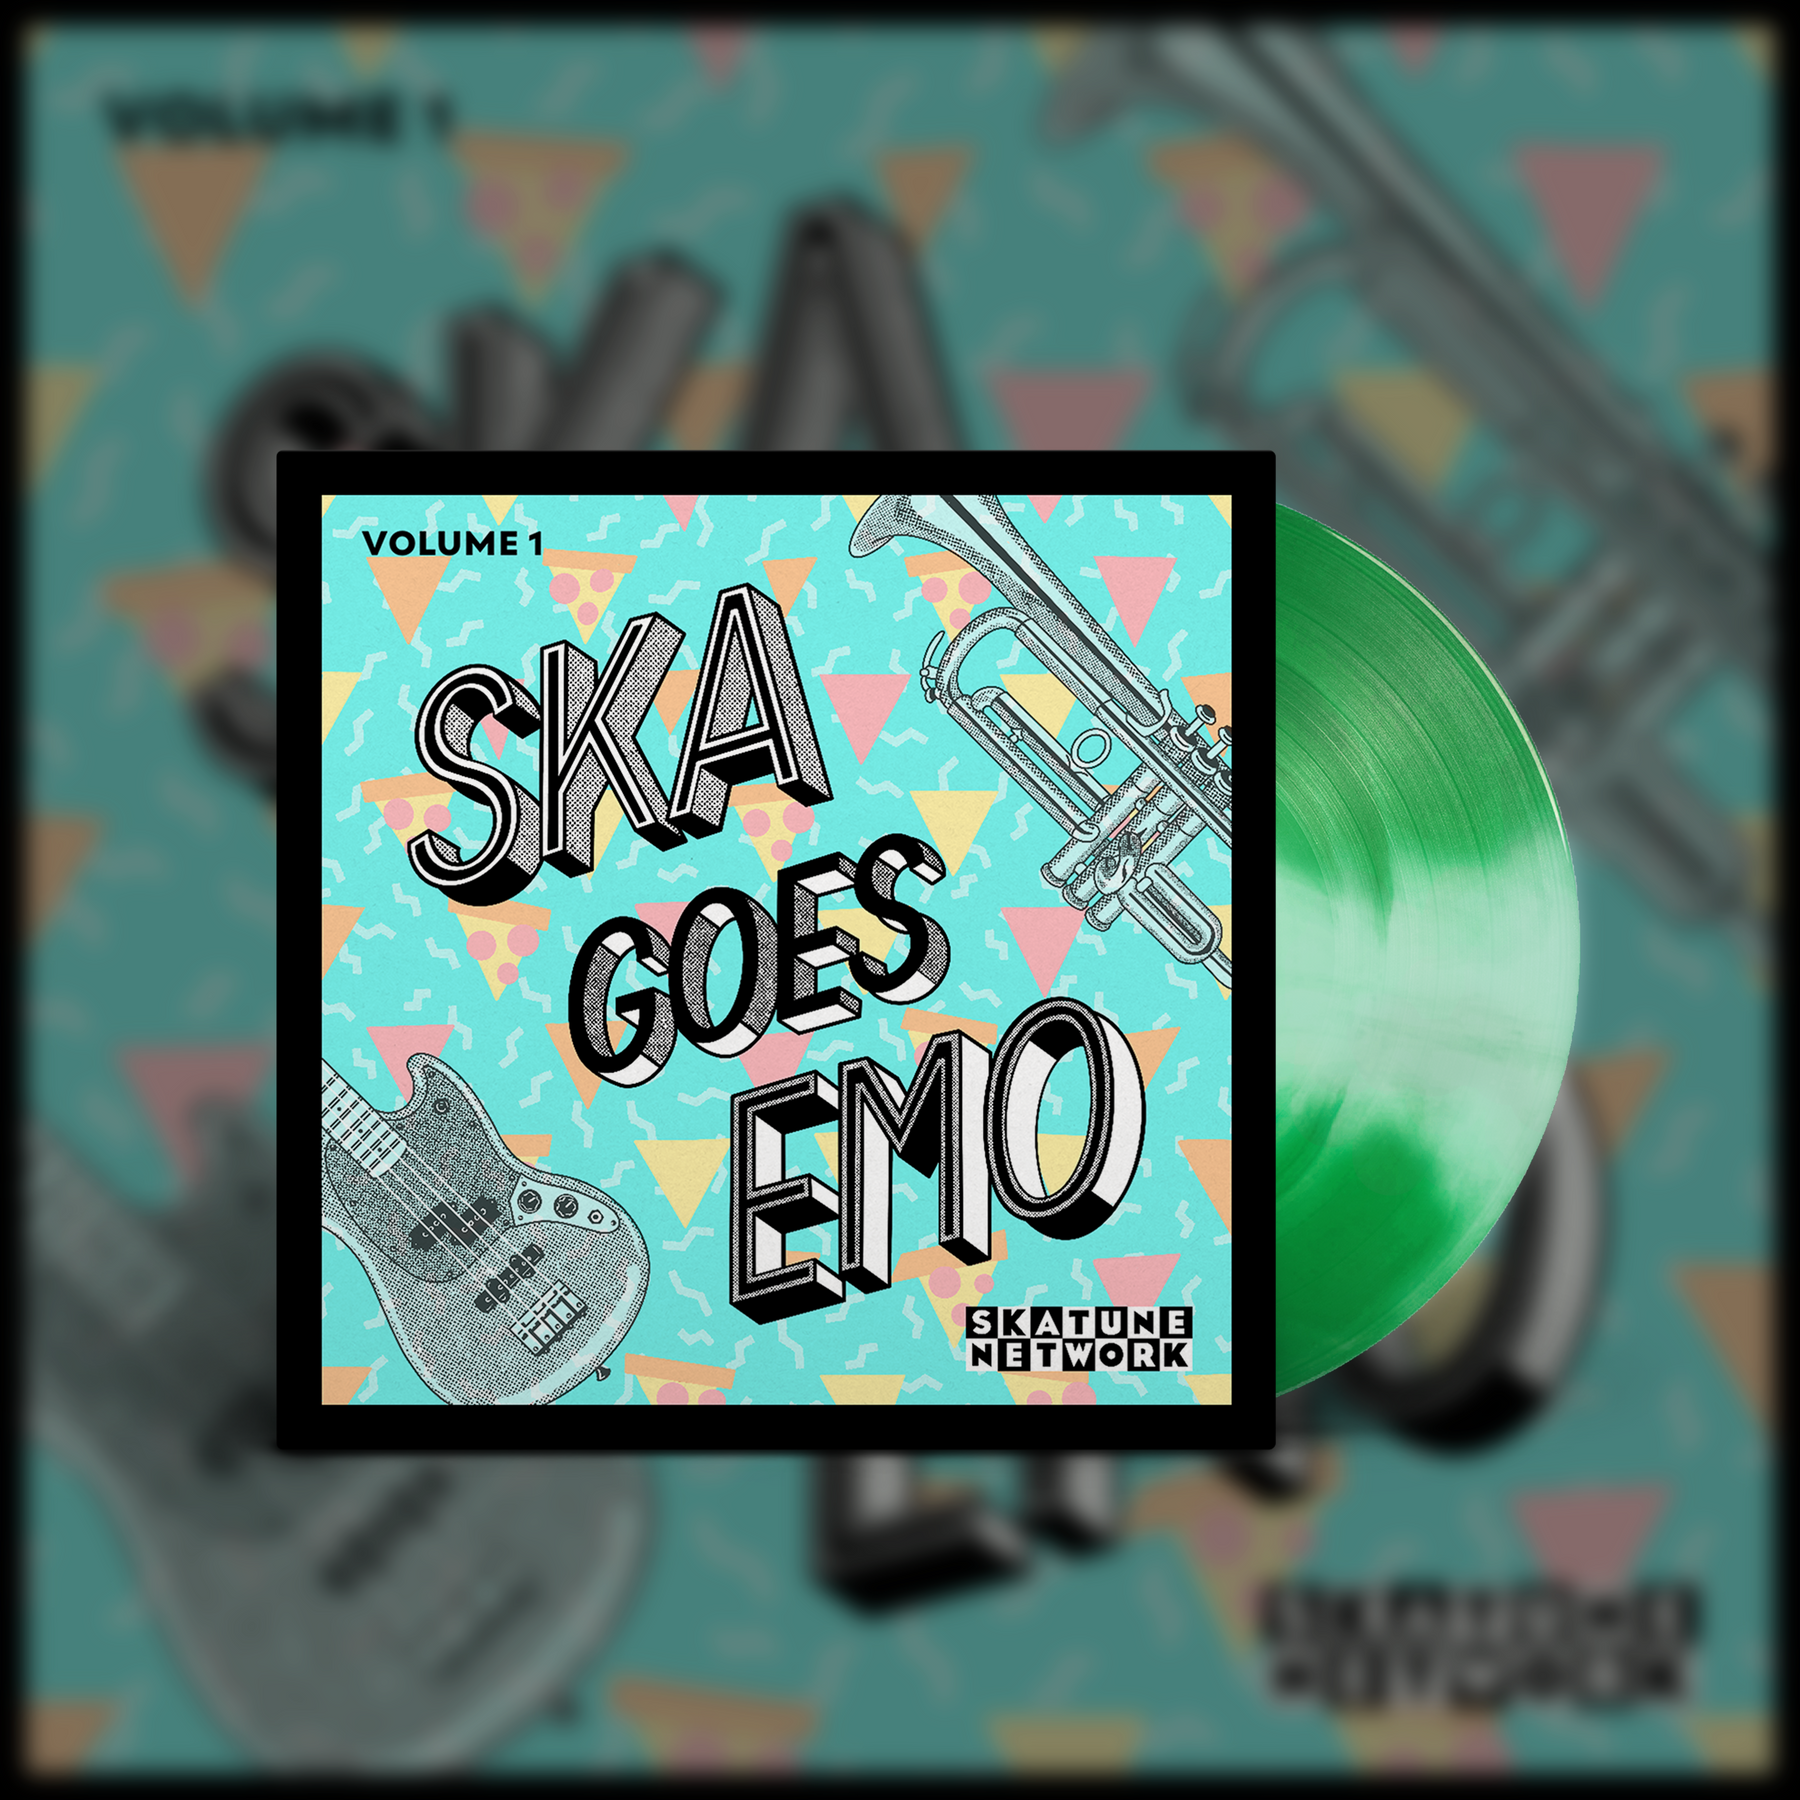 Skatune Network - Ska Goes Emo Vol. 1